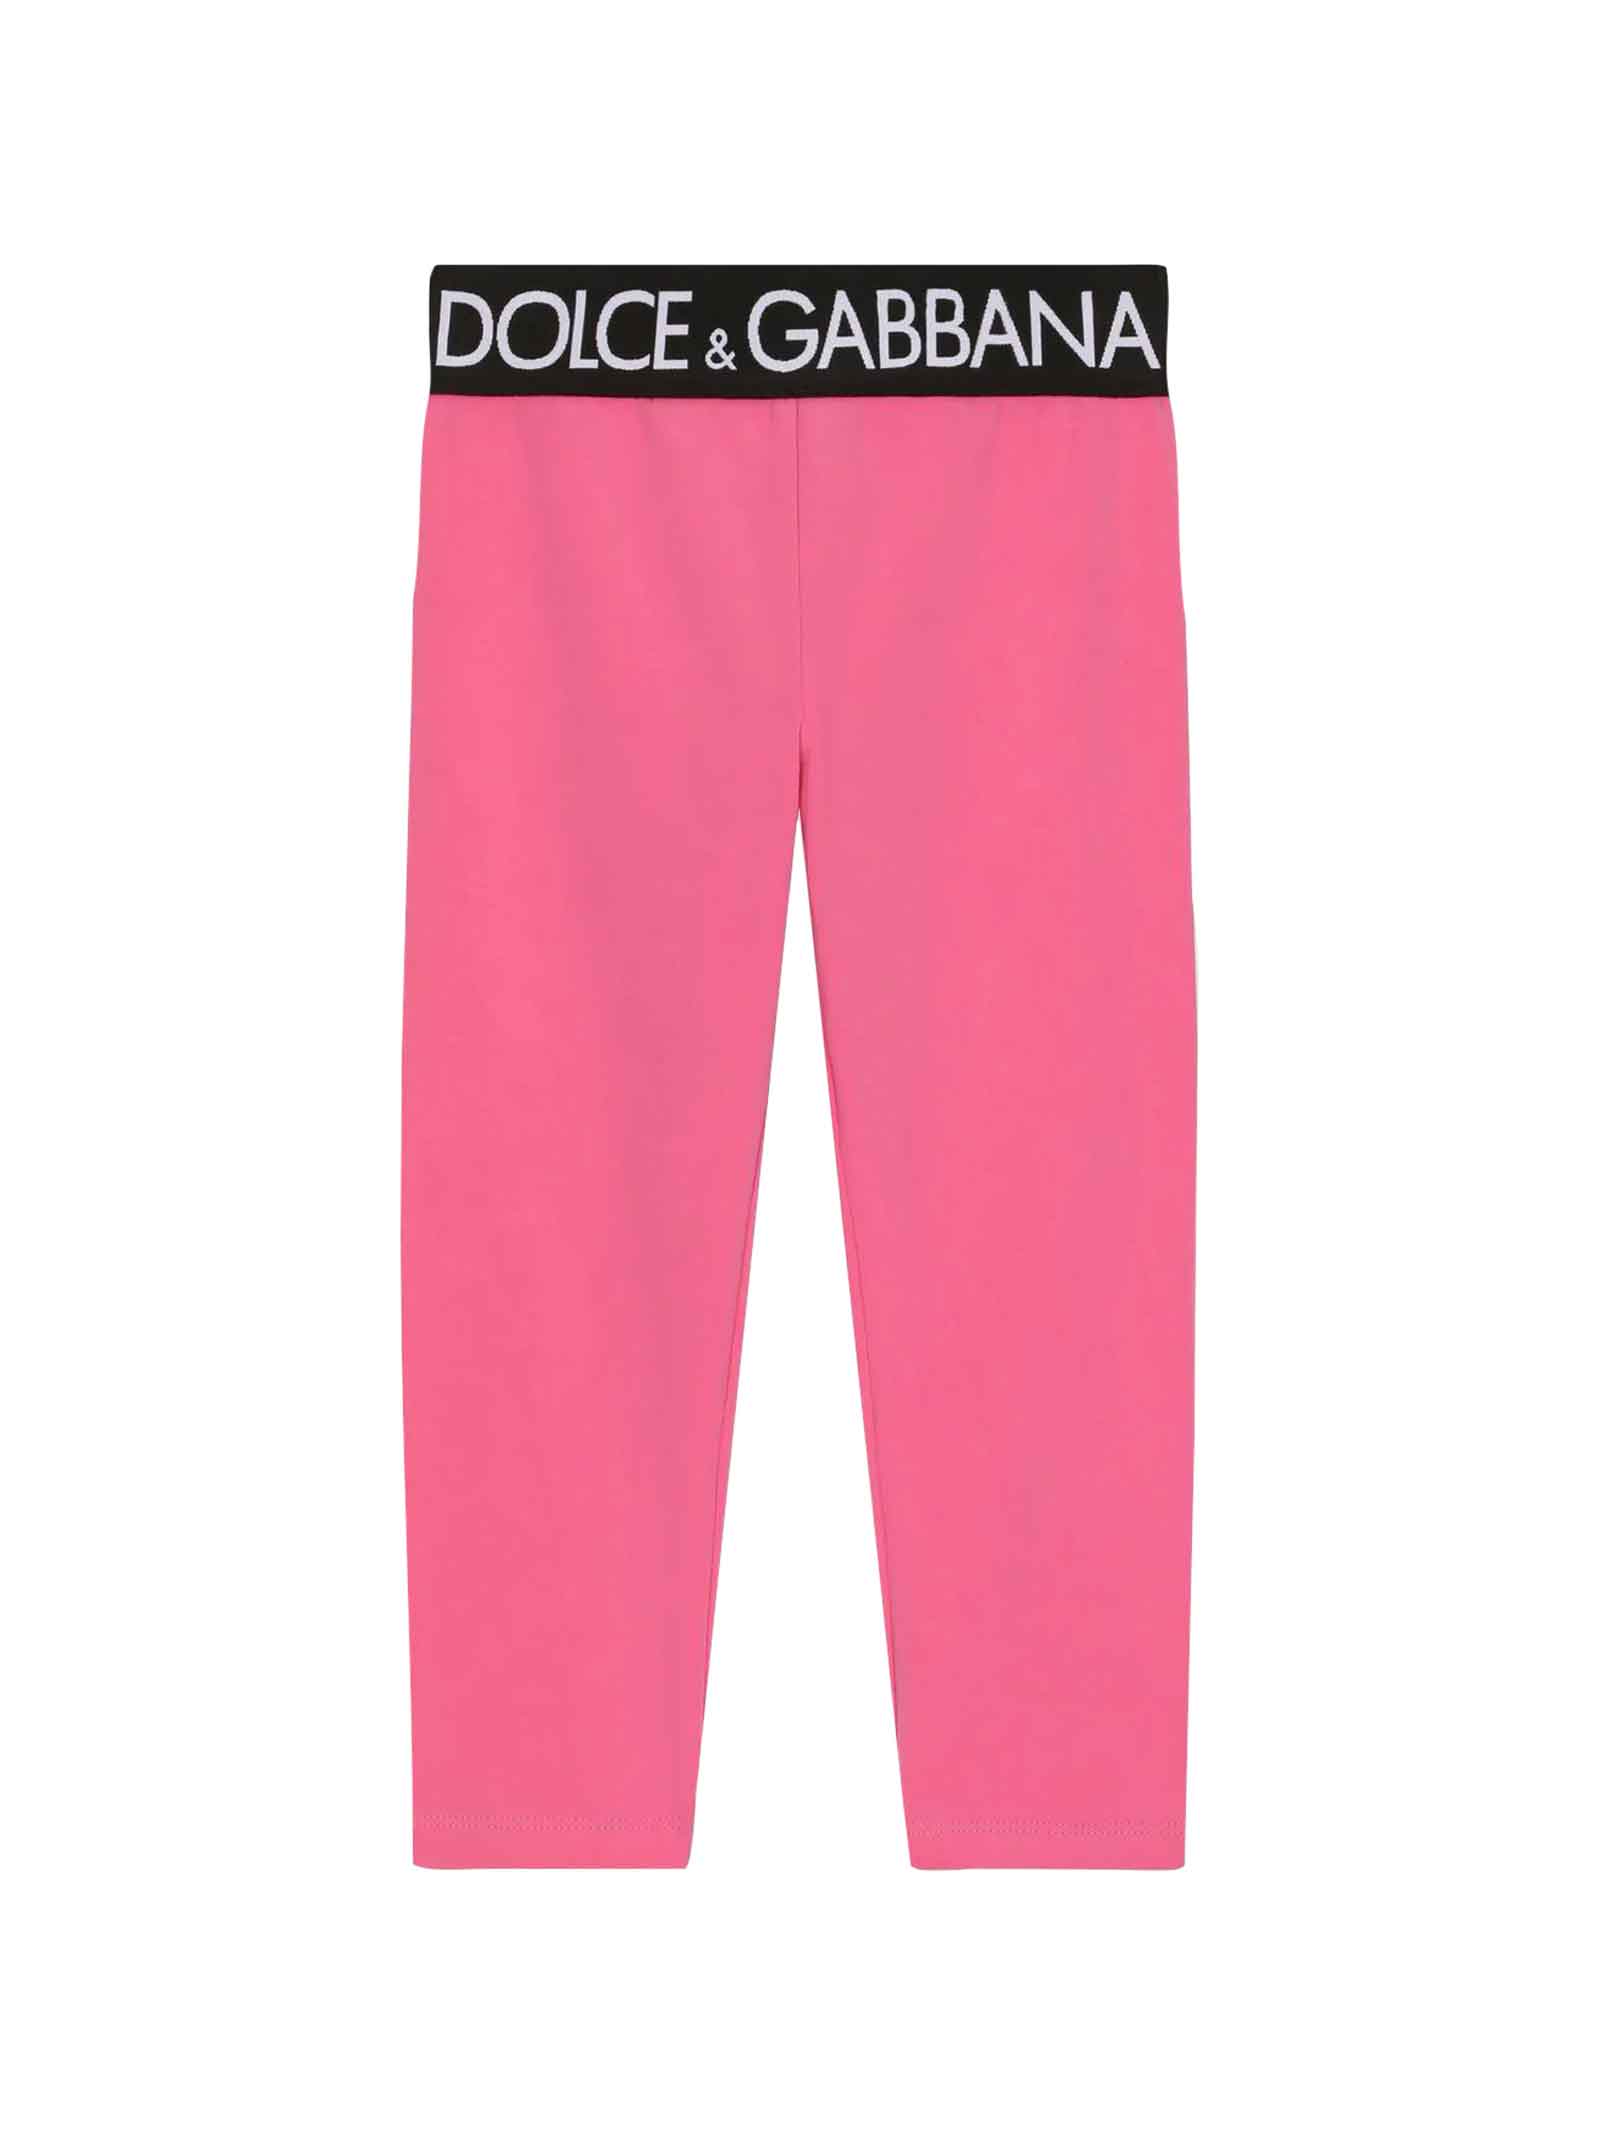 Dolce & Gabbana Pink Leggings Girl